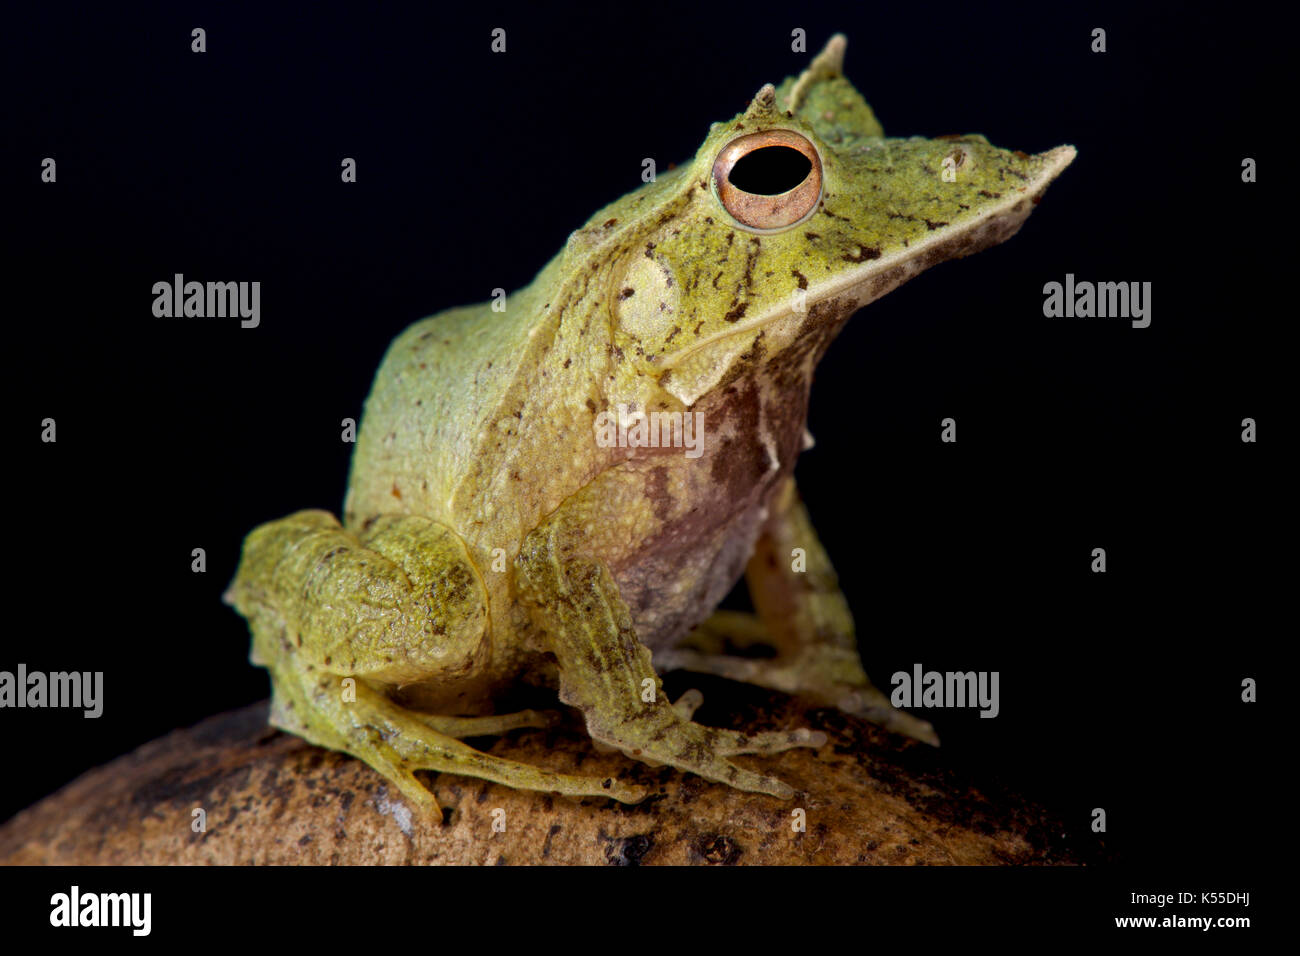 Solomon Island Leaf Frog, Ceratobatrachus guentheri Stock Photo